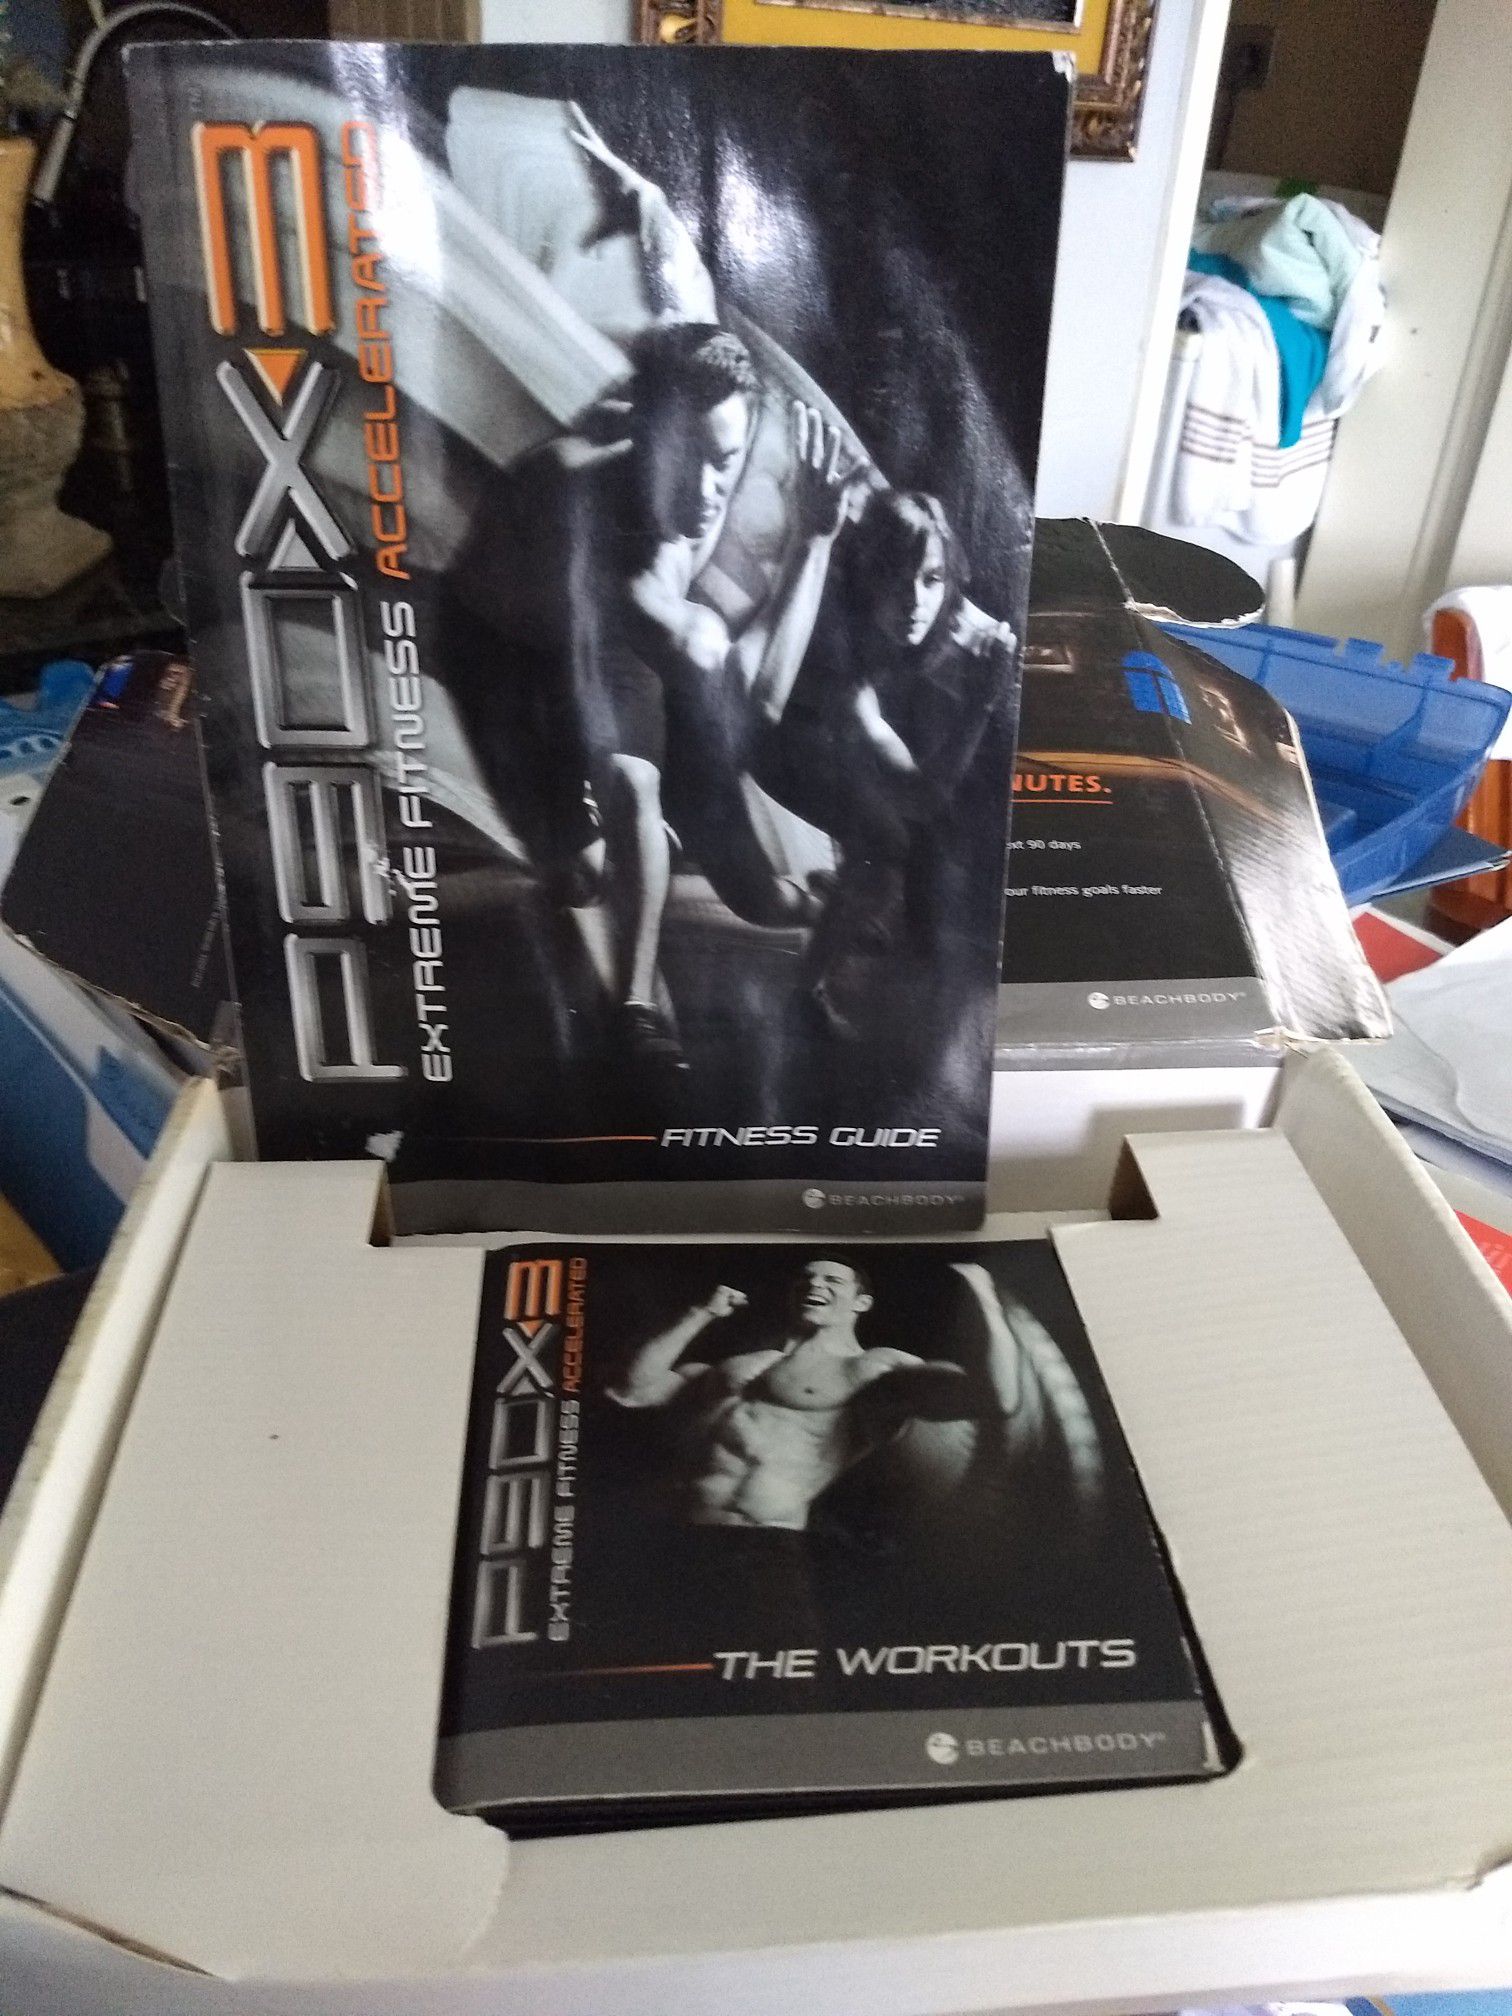 P90 fitness DVD set also insanity DVD set